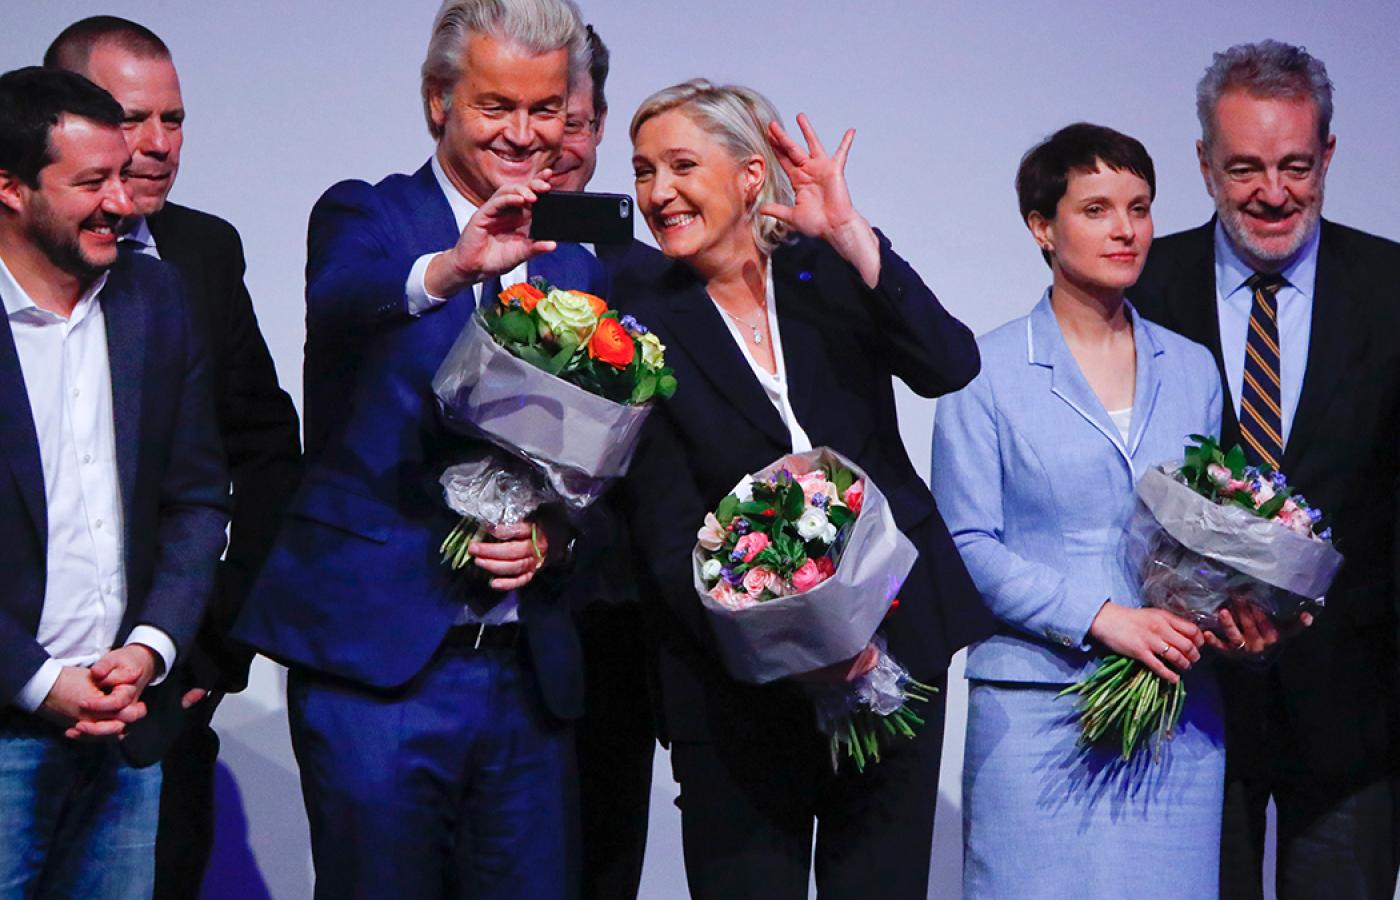 Kongres w Koblencji. Od lewej: Matteo Salvini, Harald Vilimsky, Geert Wilders, Marcus Pretzell, Marine Le Pen, Frauke Petry.